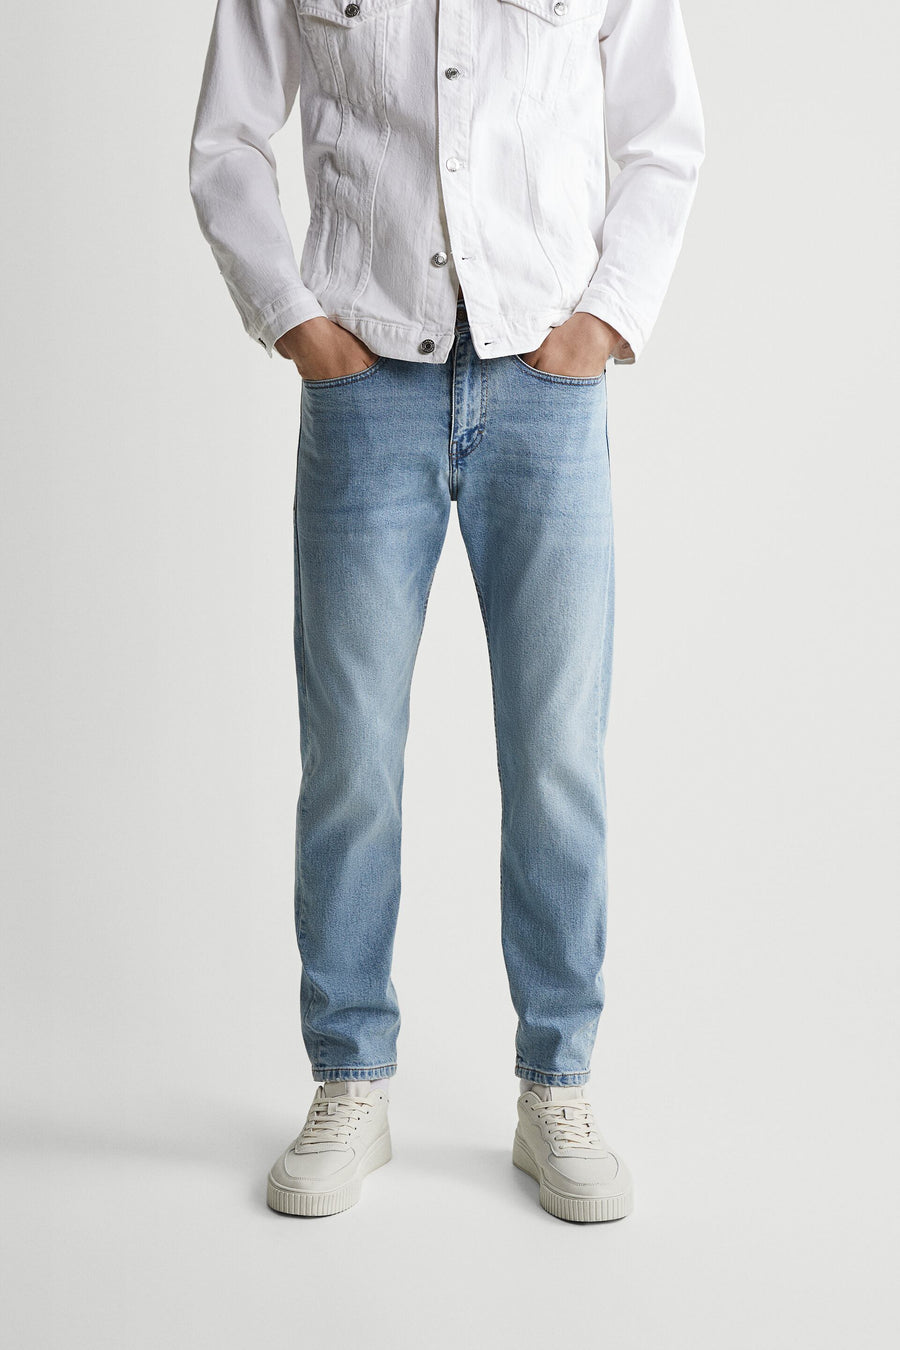 Zara Man Jeans 5575/480/406